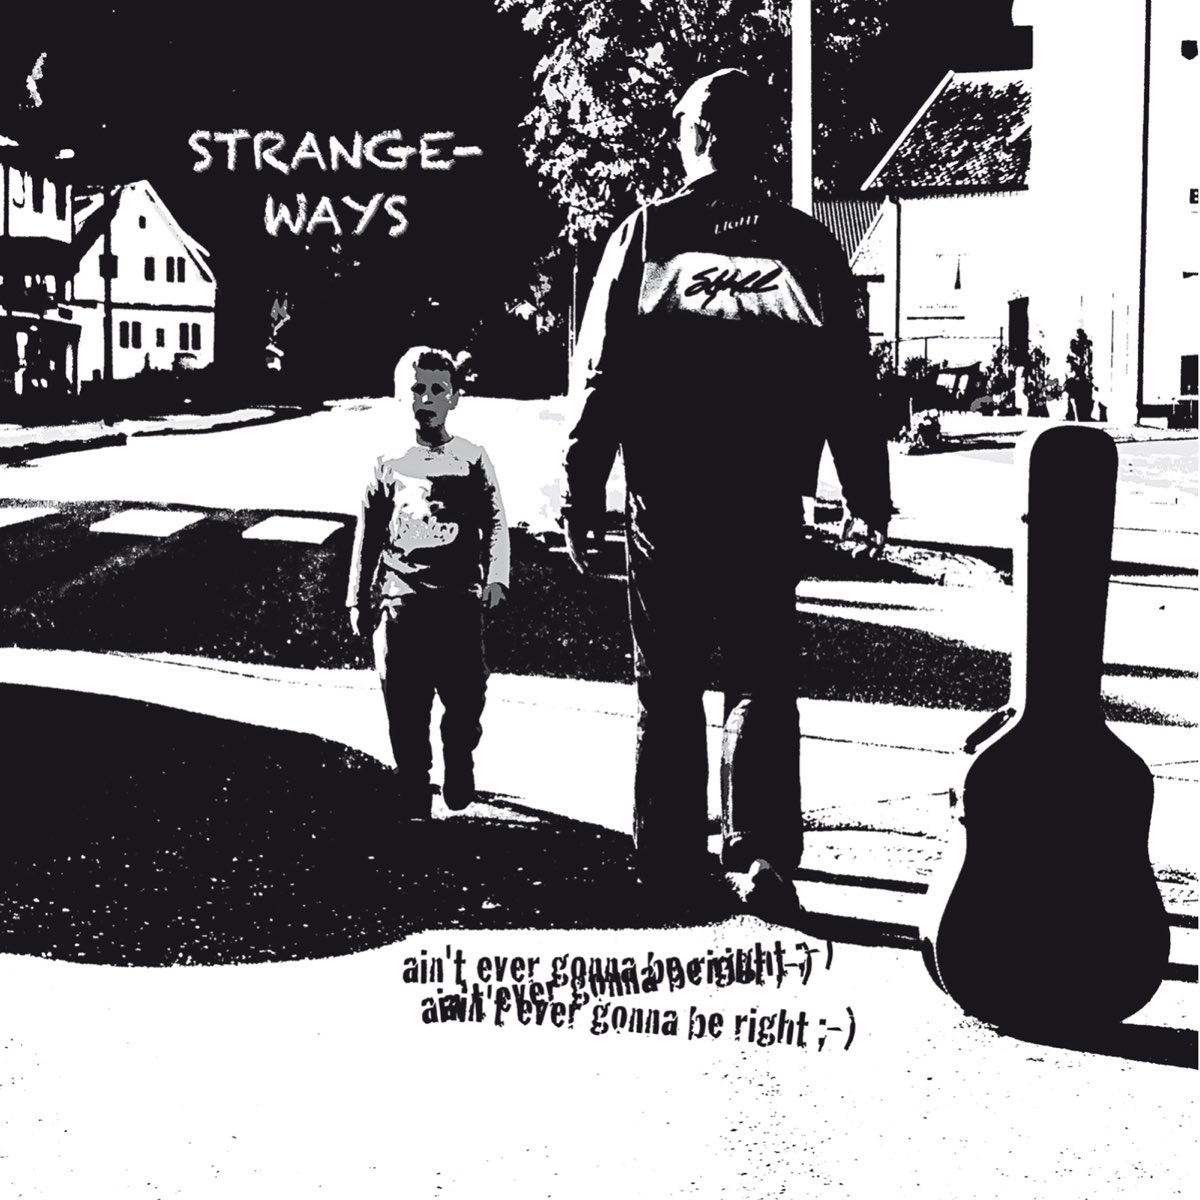 Stranger way of life. Strangeways. Strange ways. Исполнитель Strangeways. Strangeways - Now its gone.